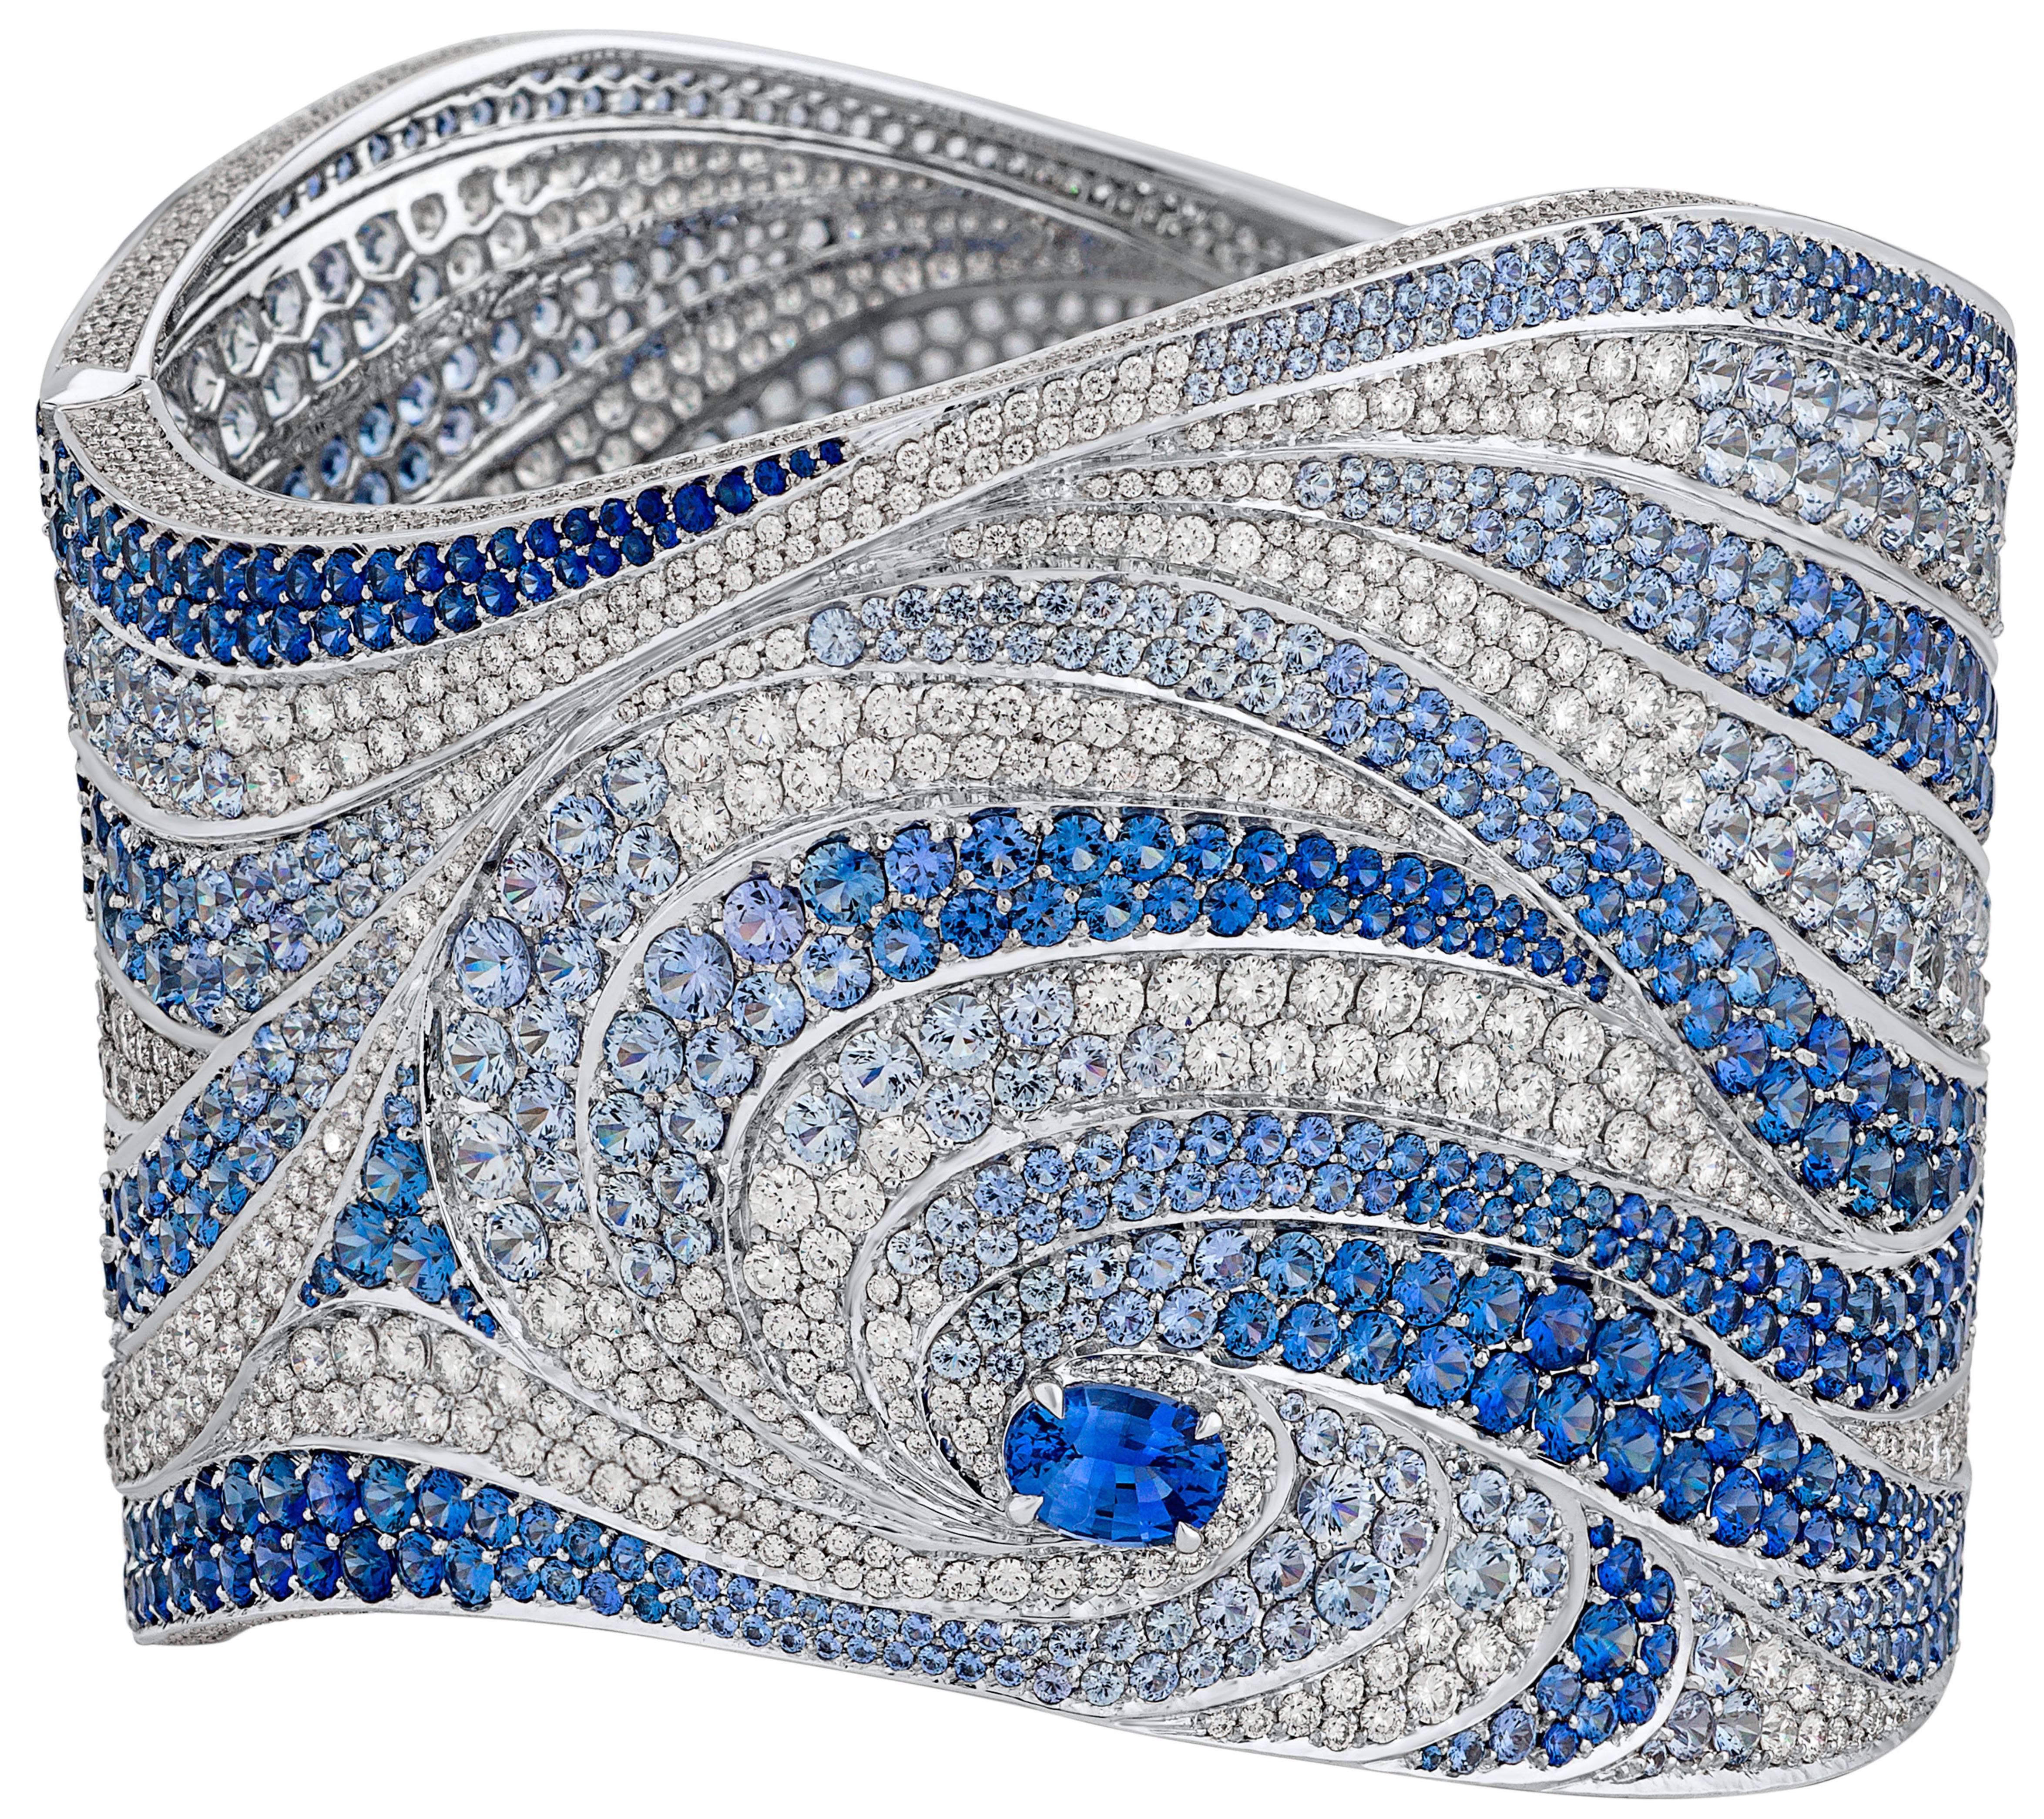 Contemporary White Gold, White Diamond and Blue Sapphire Bangle Bracelet